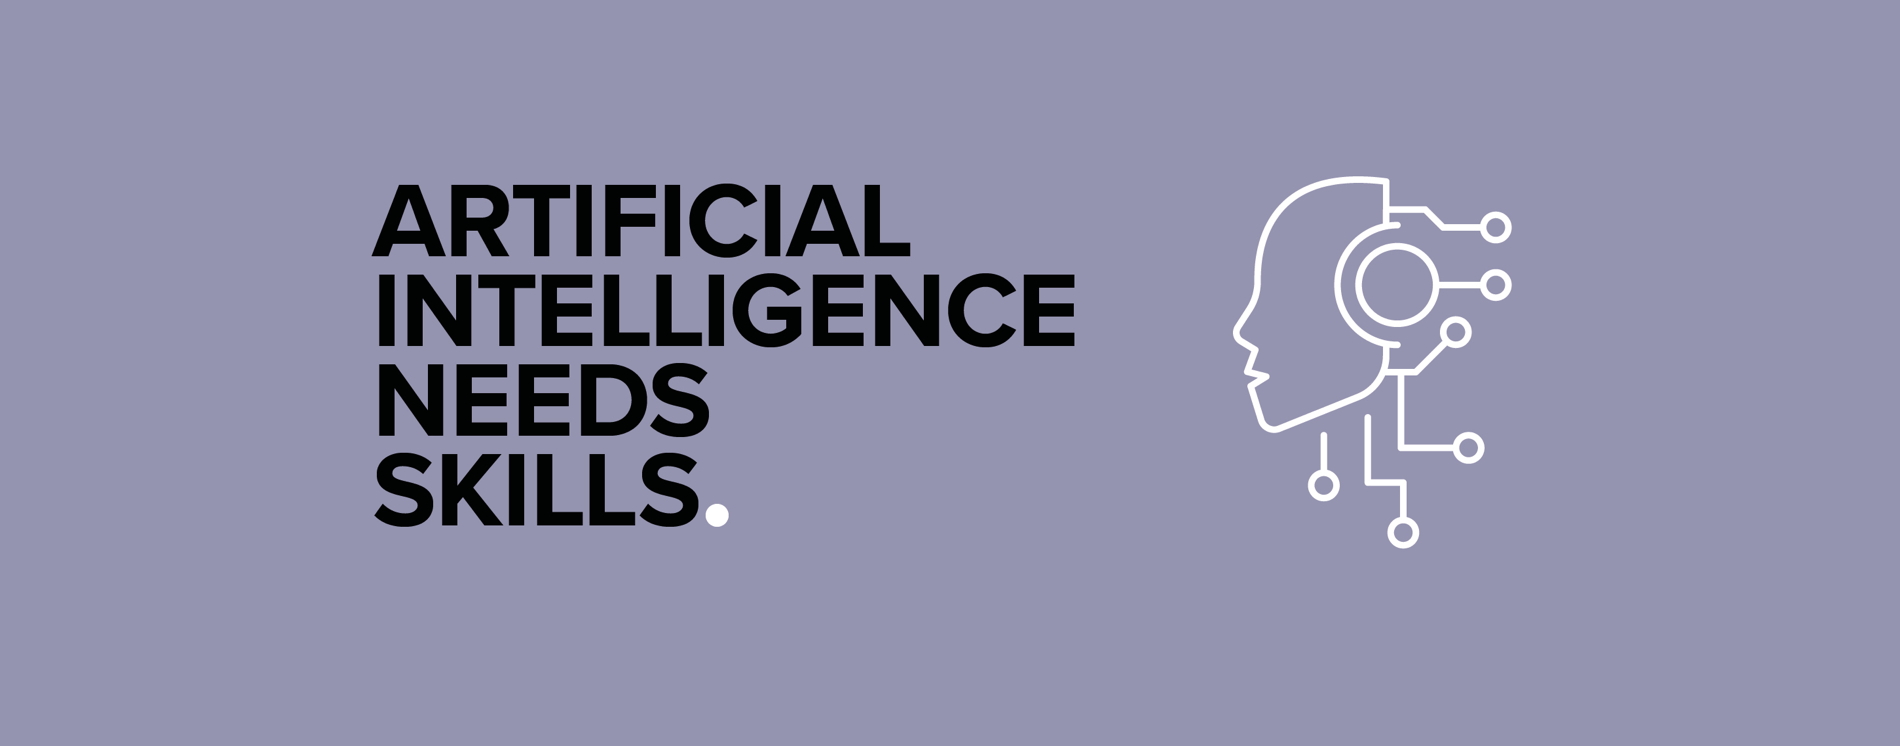 Artificial intelligence needs Skills.